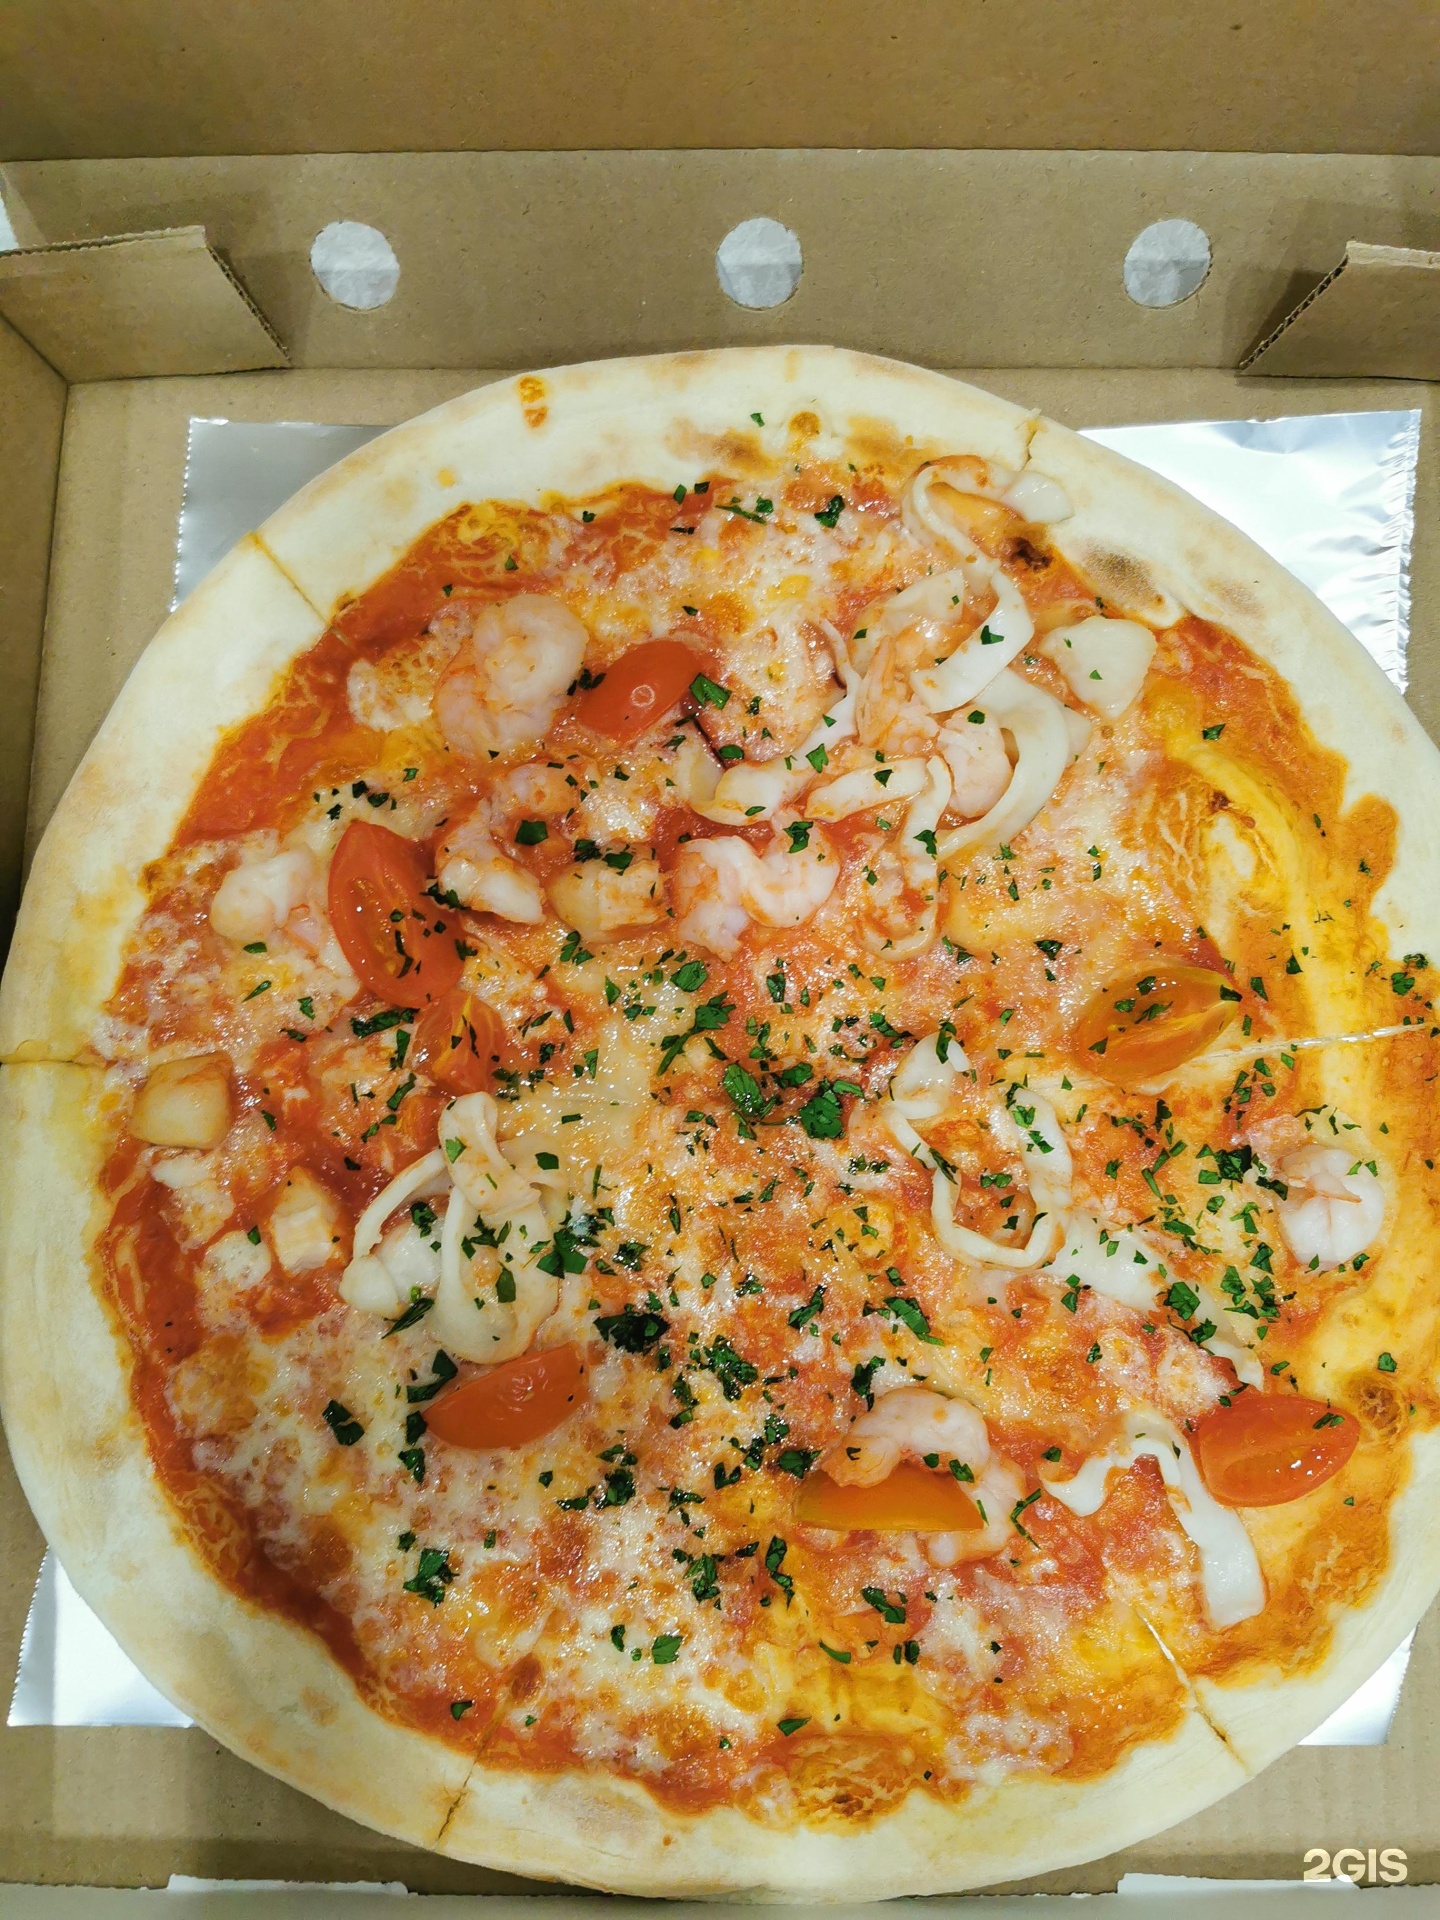 Тайгер пицца